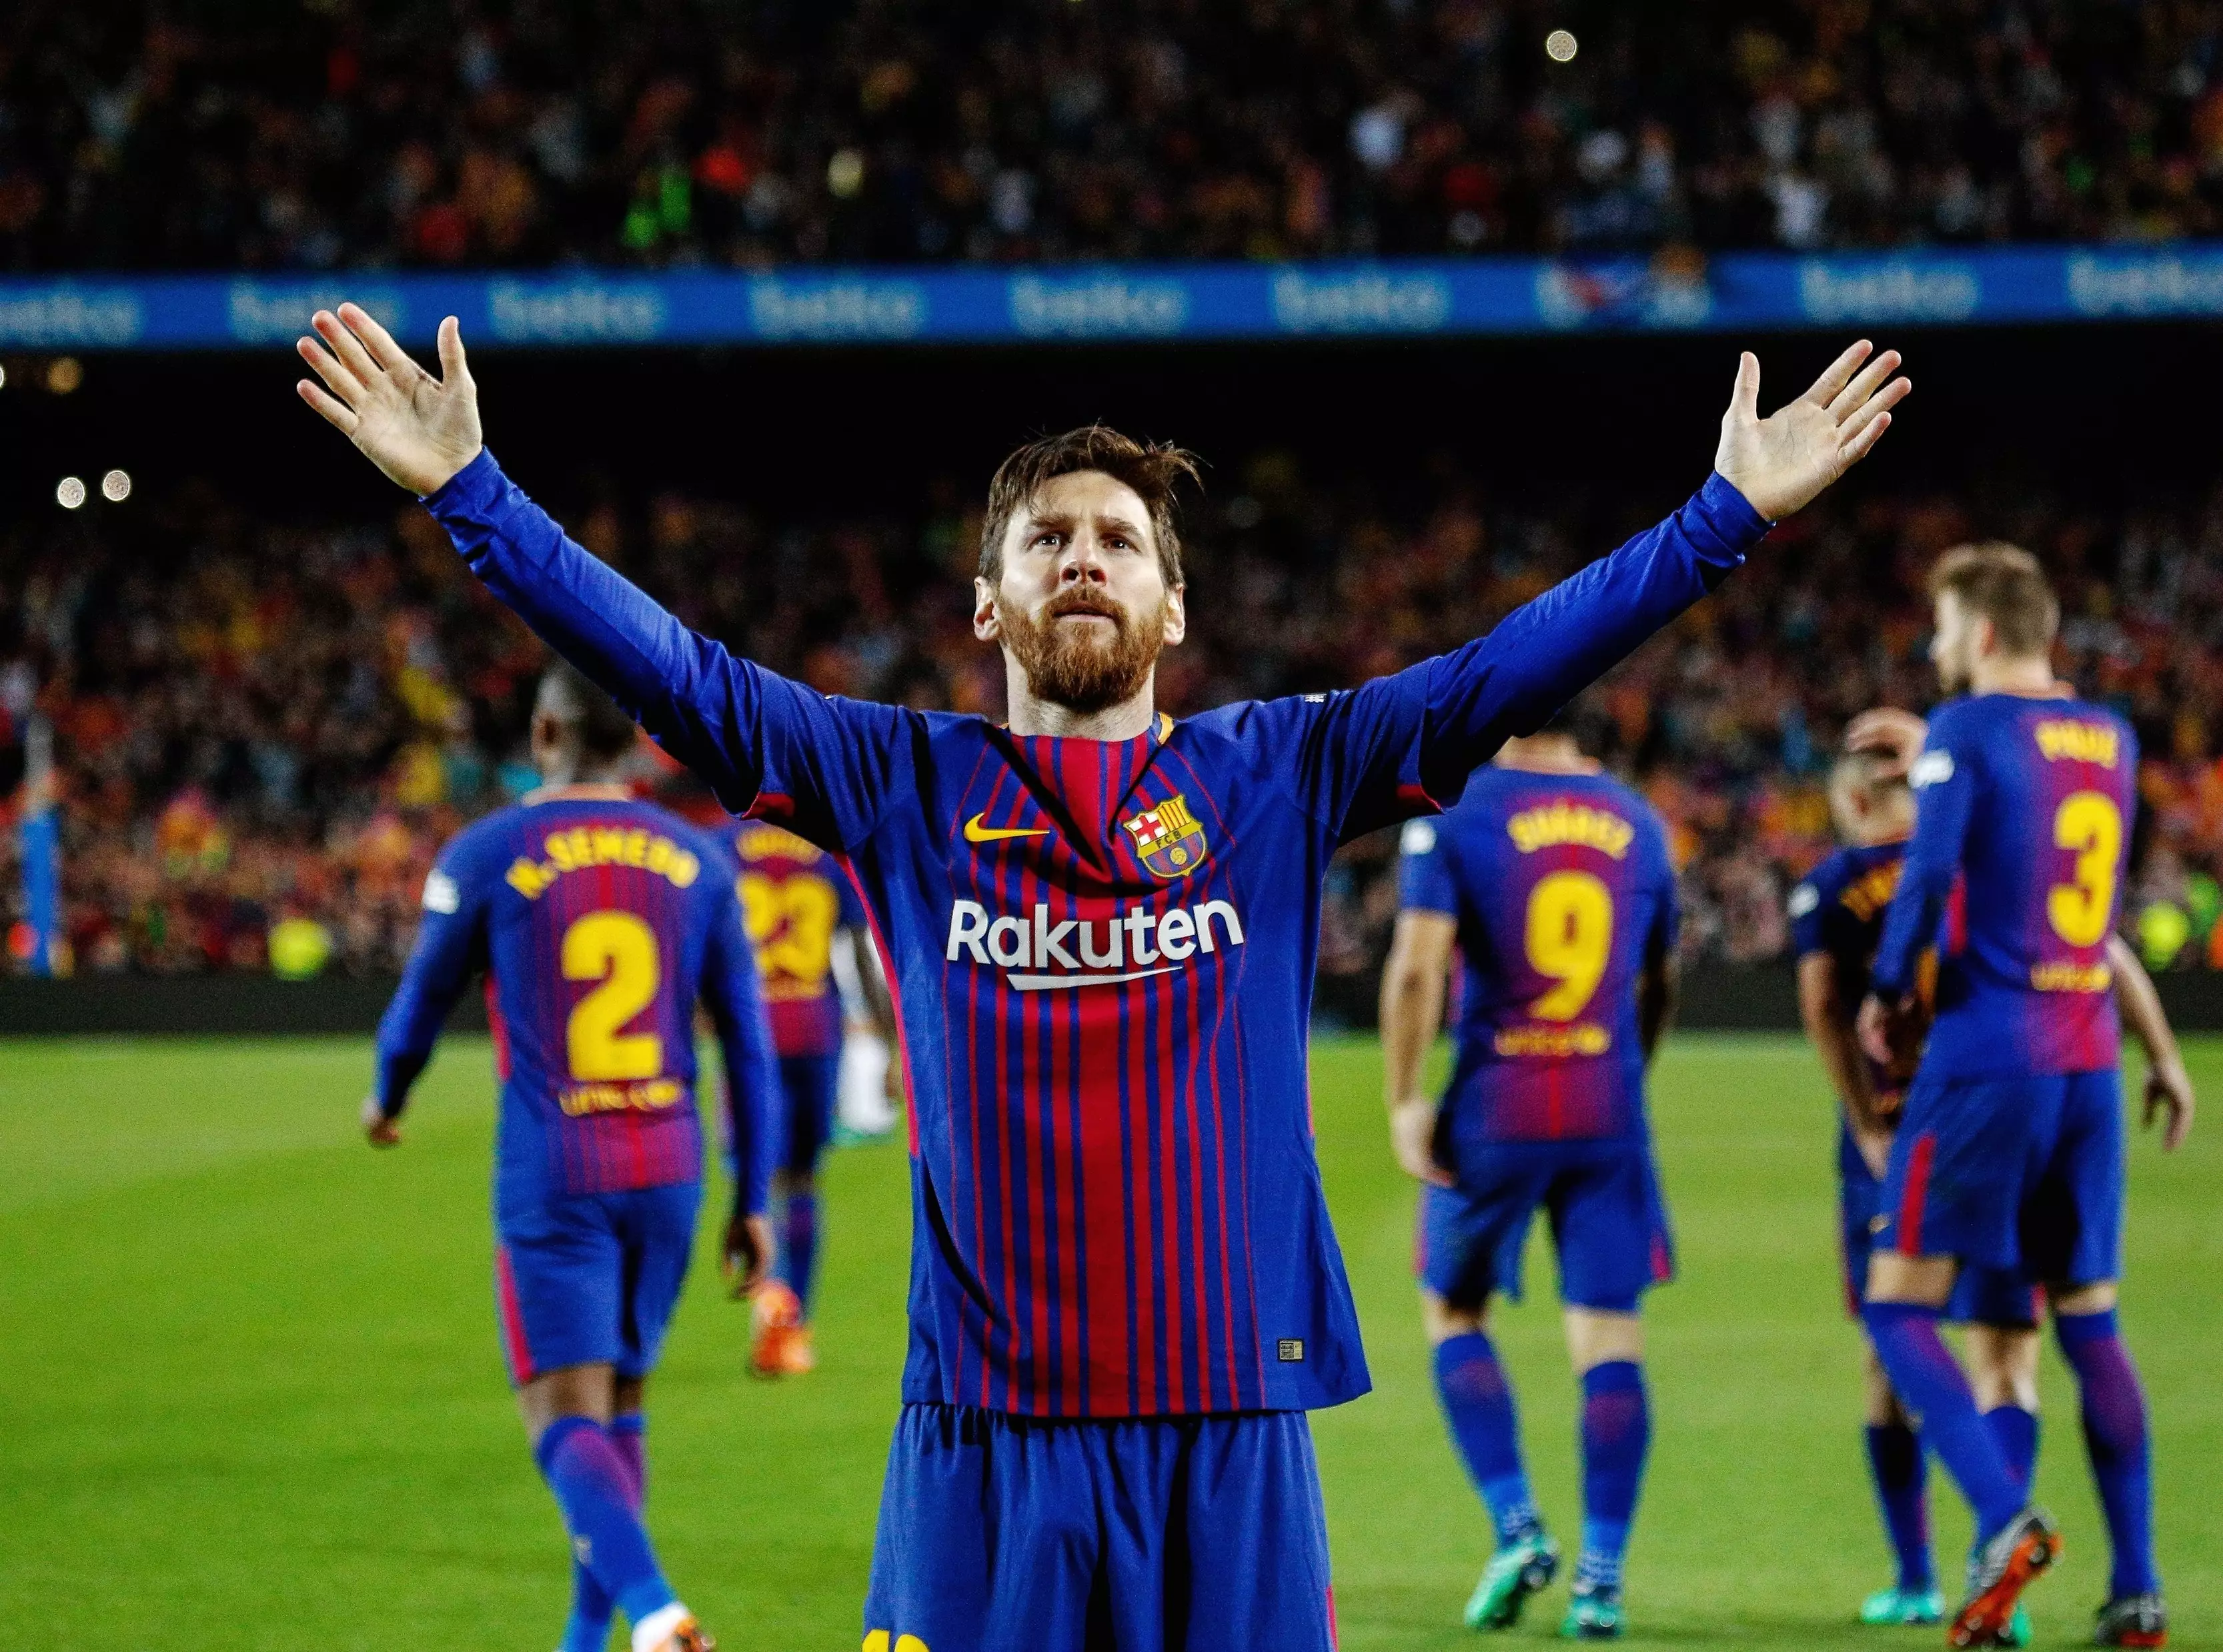 Messi celebrates scoring a goal for Barcelona. Image: PA